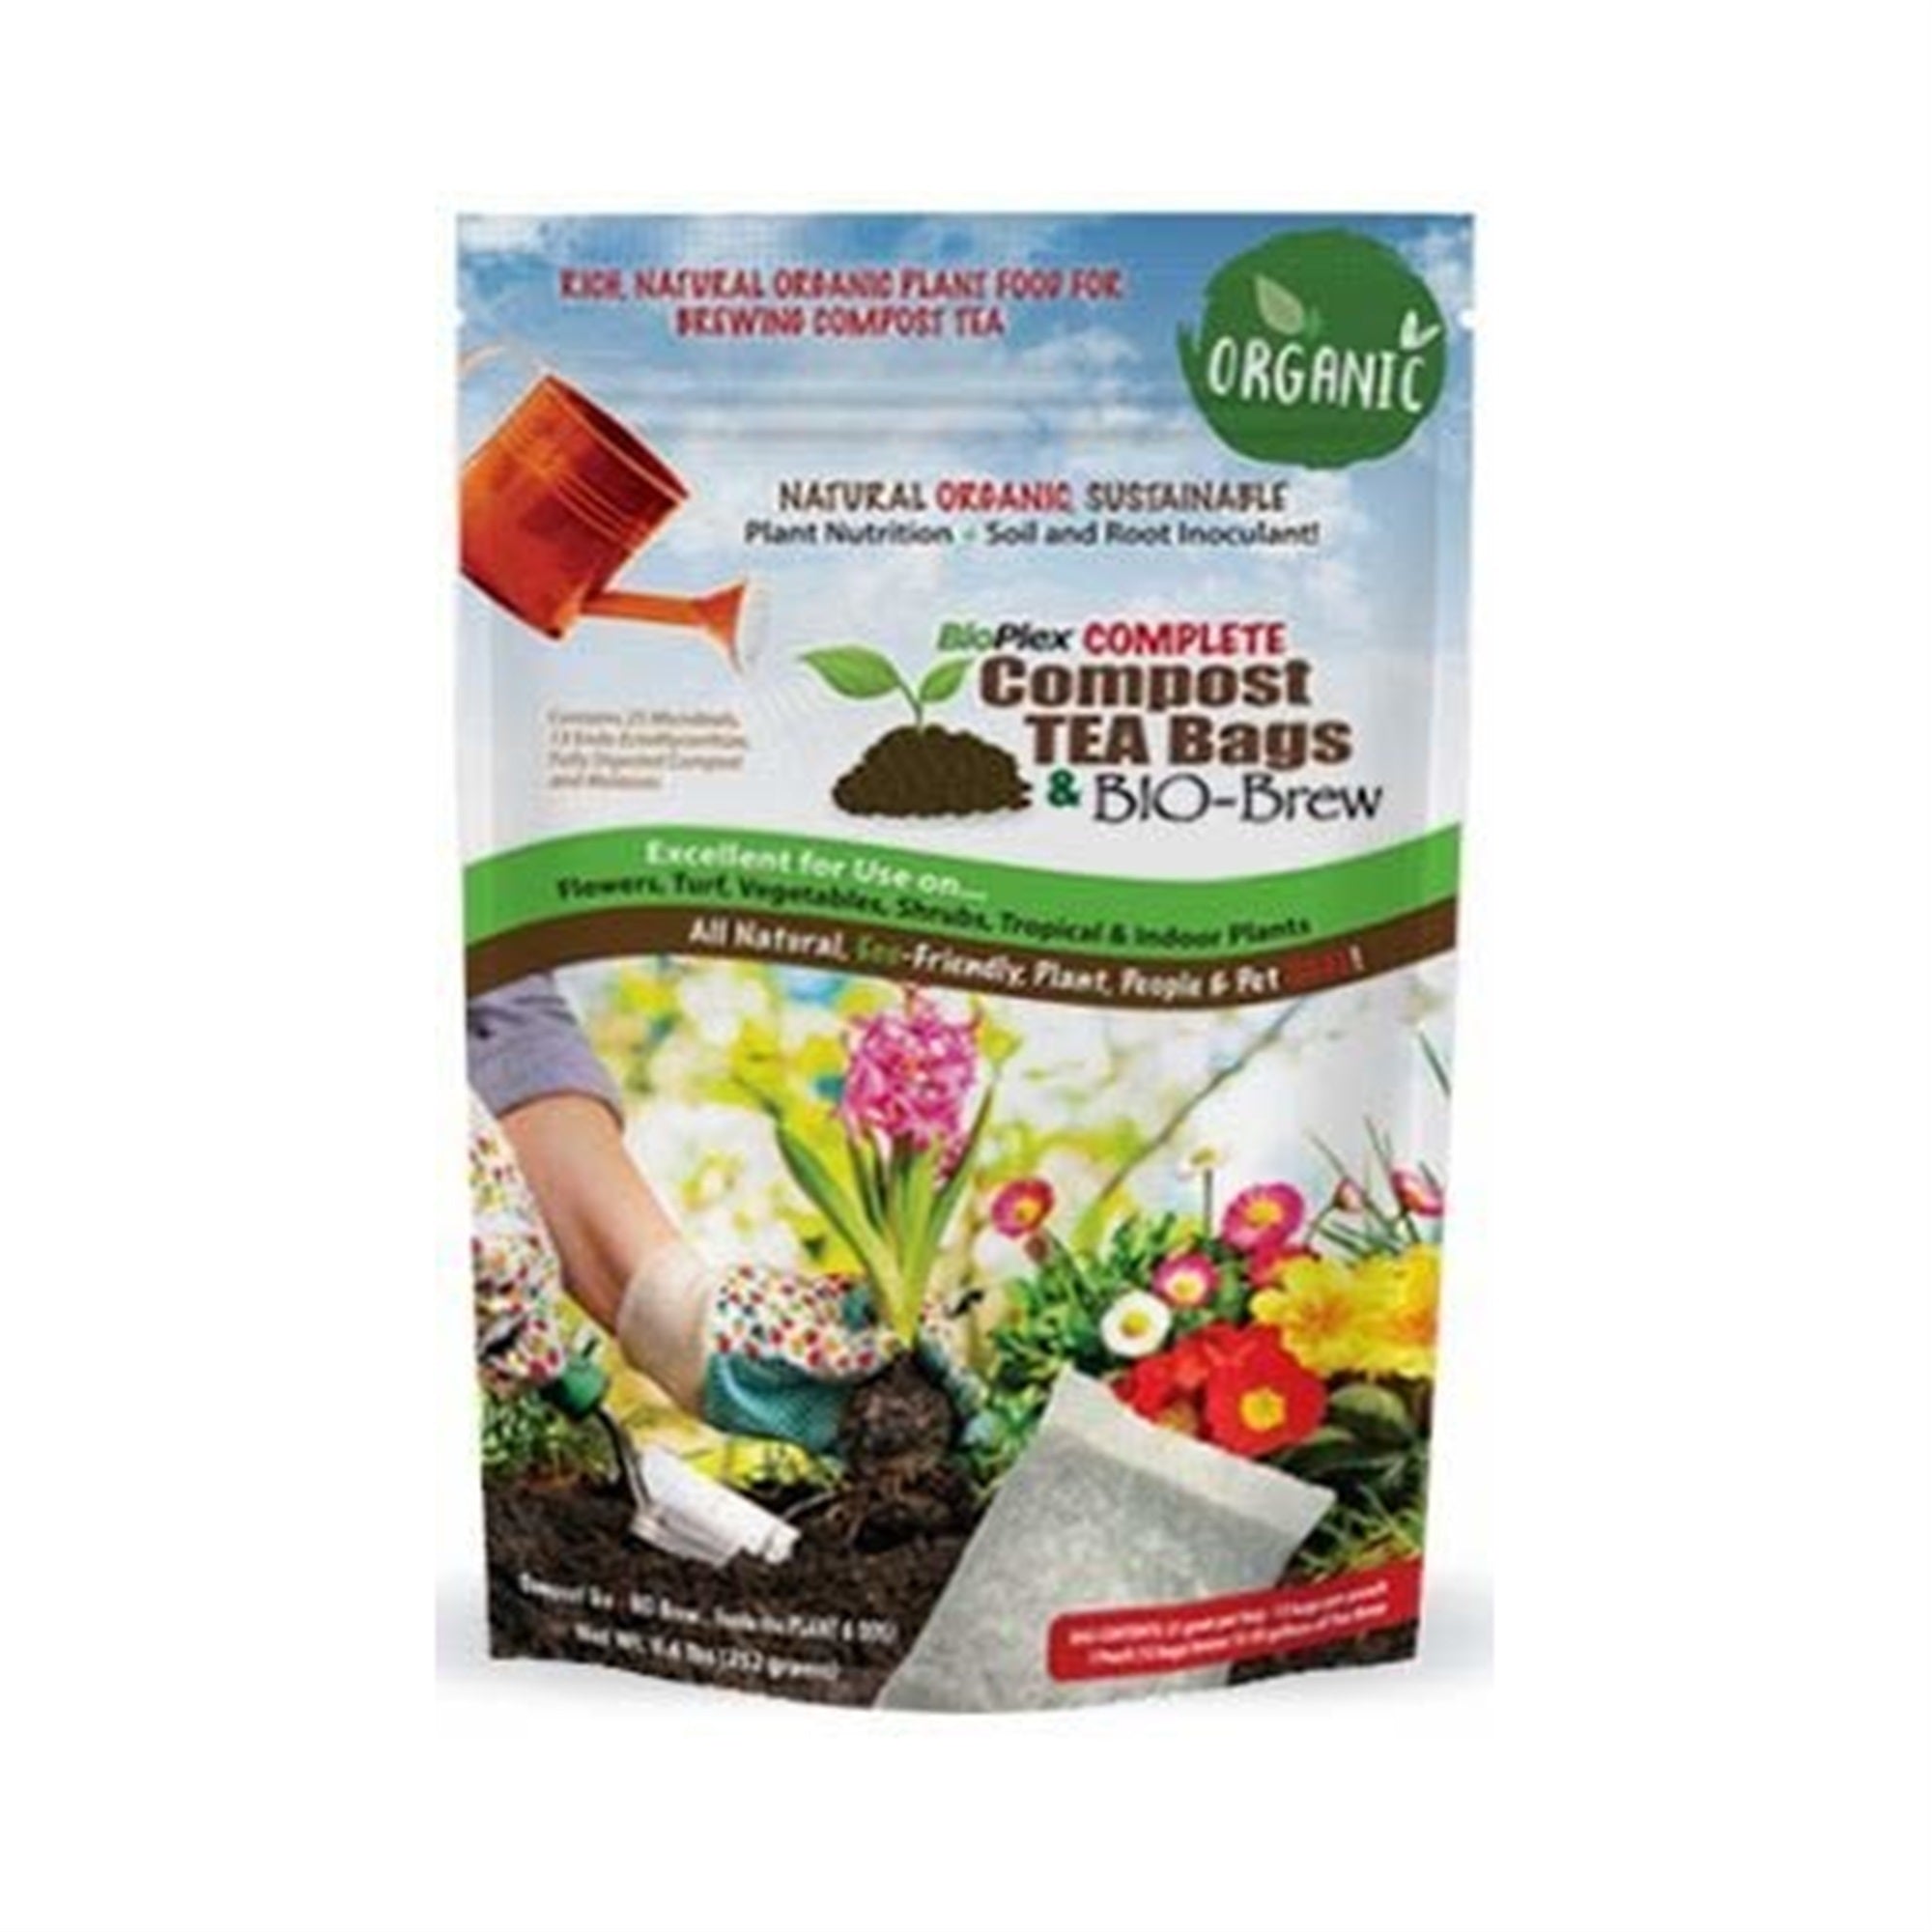 BioPlex Complete Compost Tea-Bags & Bio-Brew. (1 Pouch Containing 12 Tea Bags)